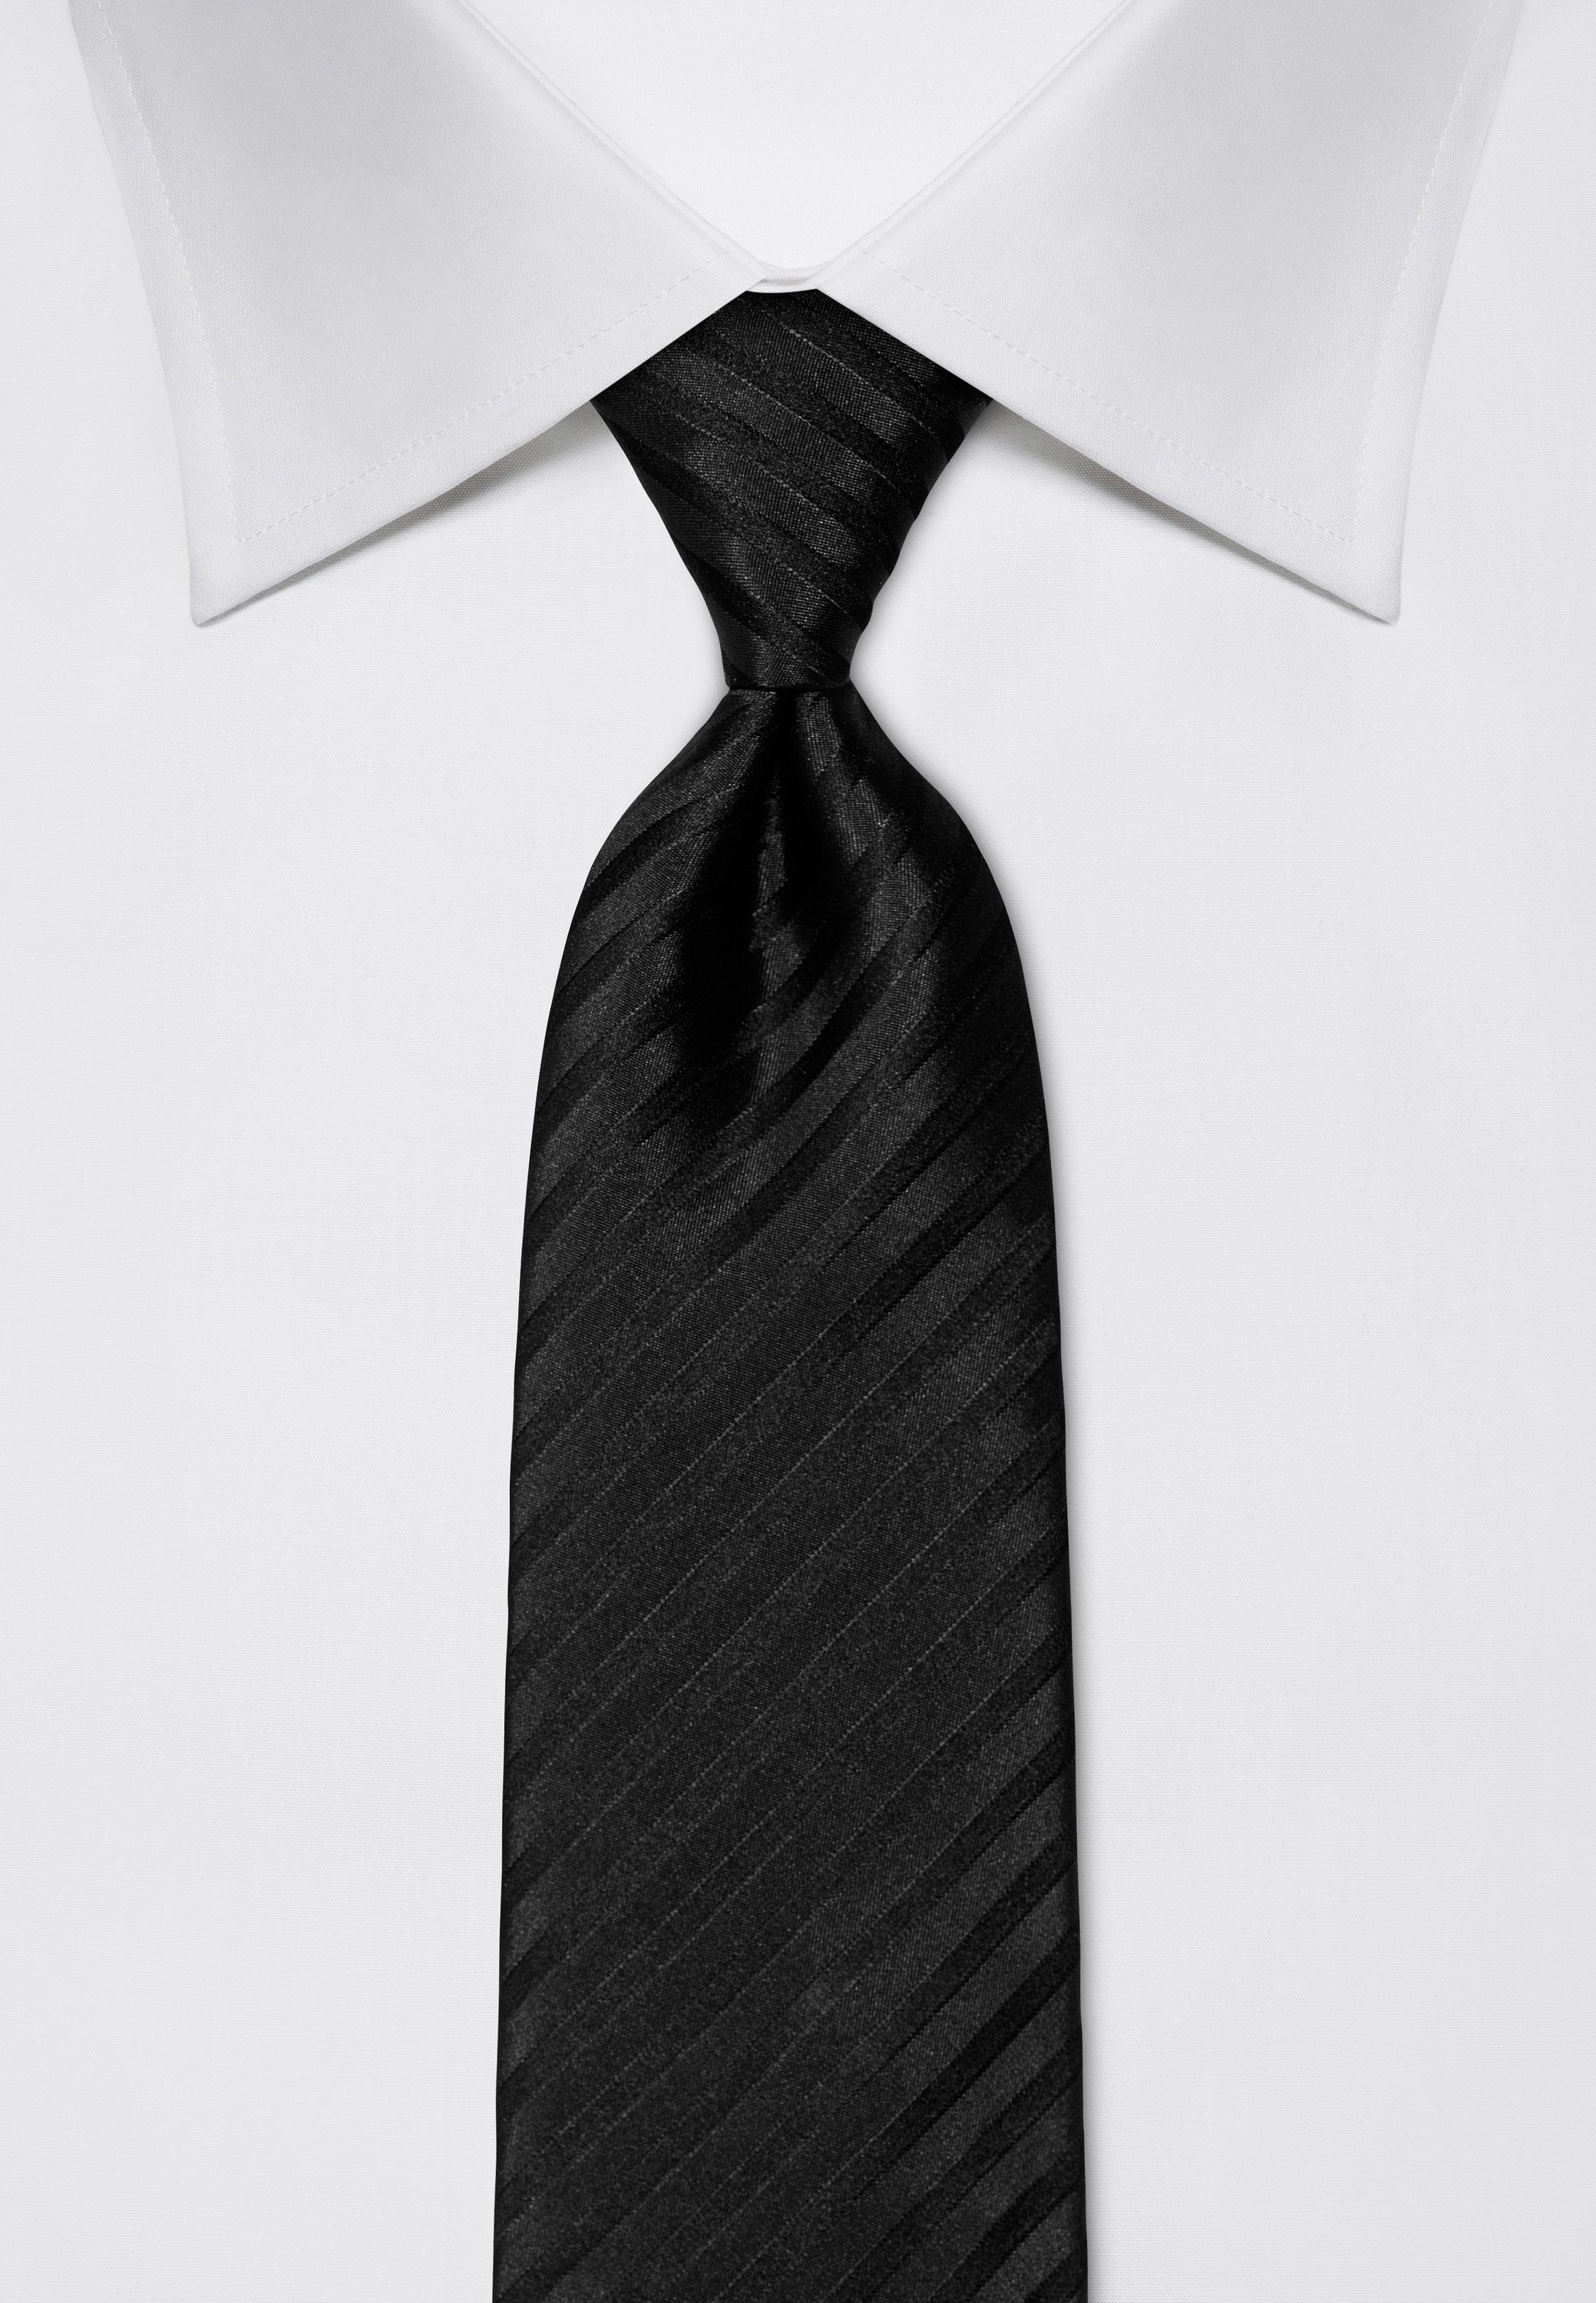 Vincenzo Boretti schwarz gestreift Krawatte